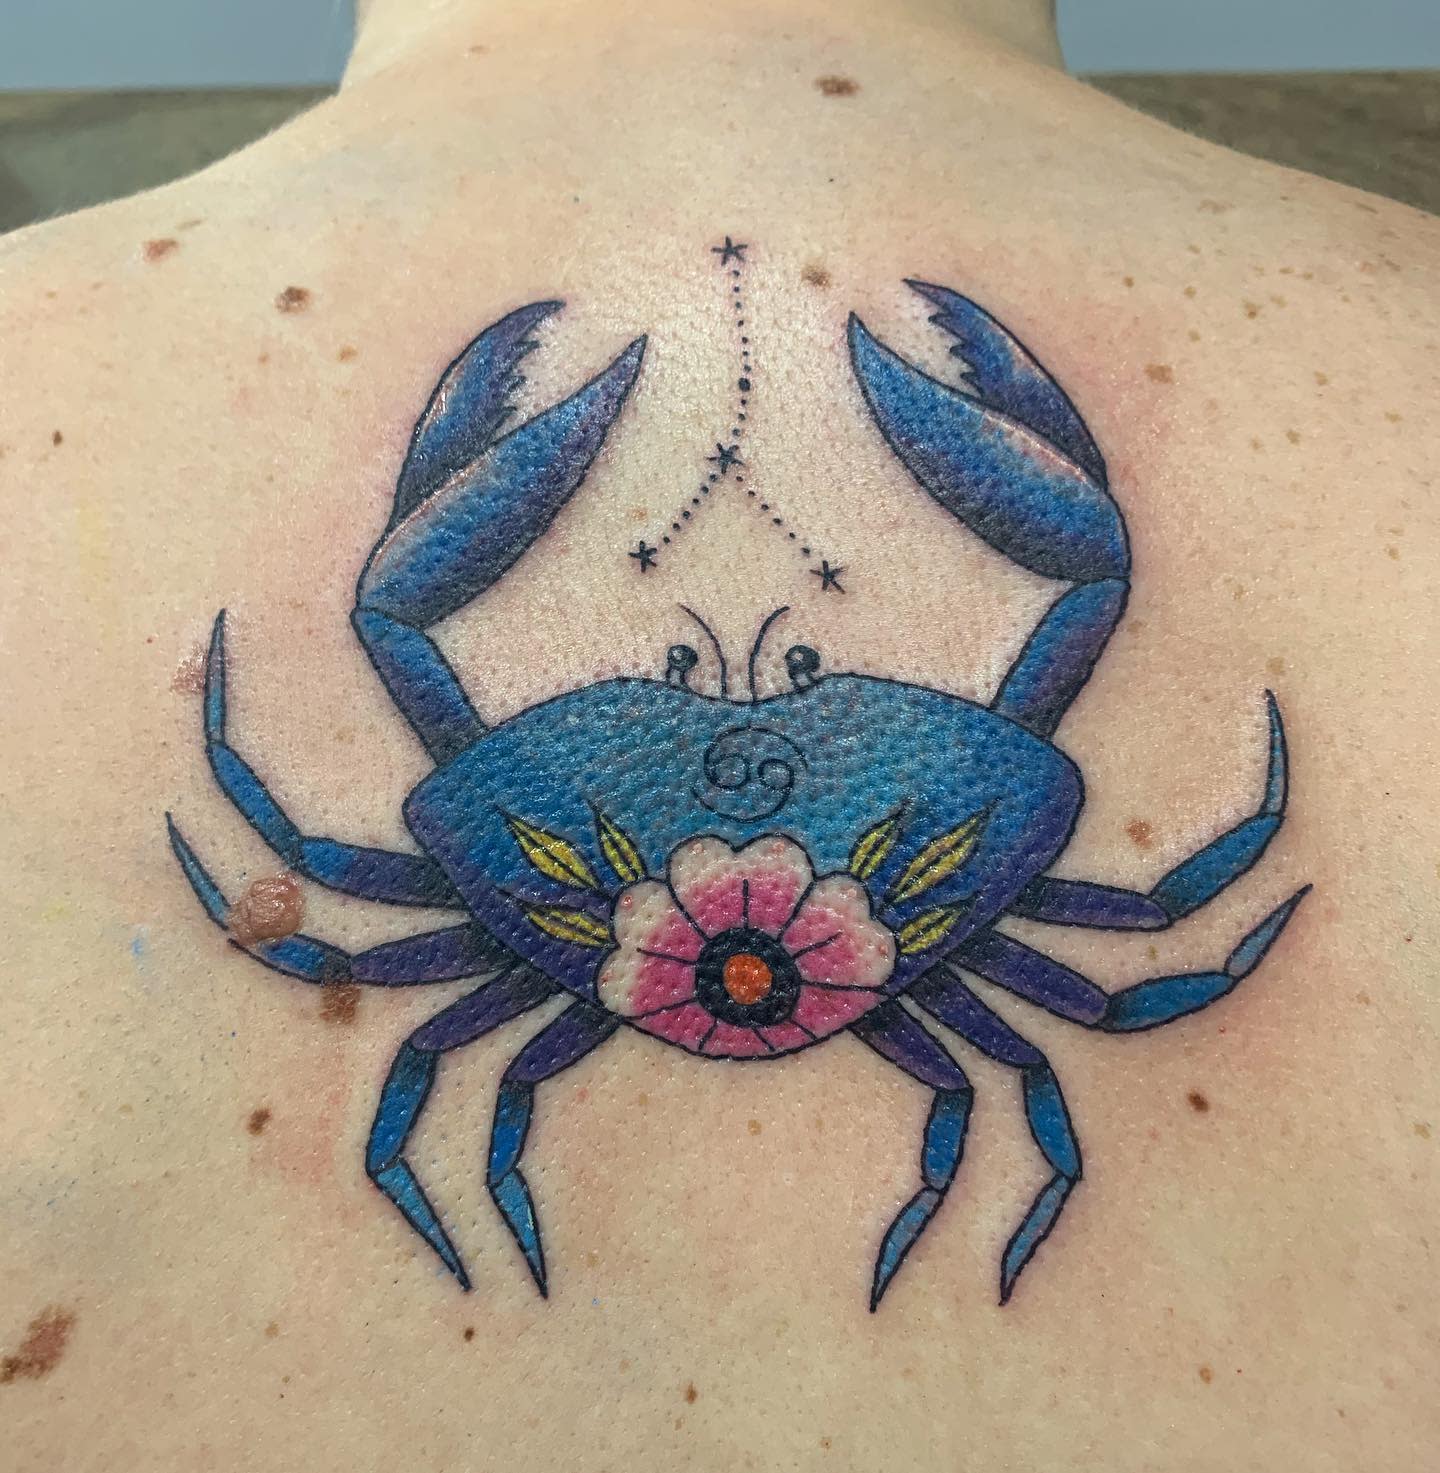 Share 91 about cancer flower tattoo super hot  indaotaonec